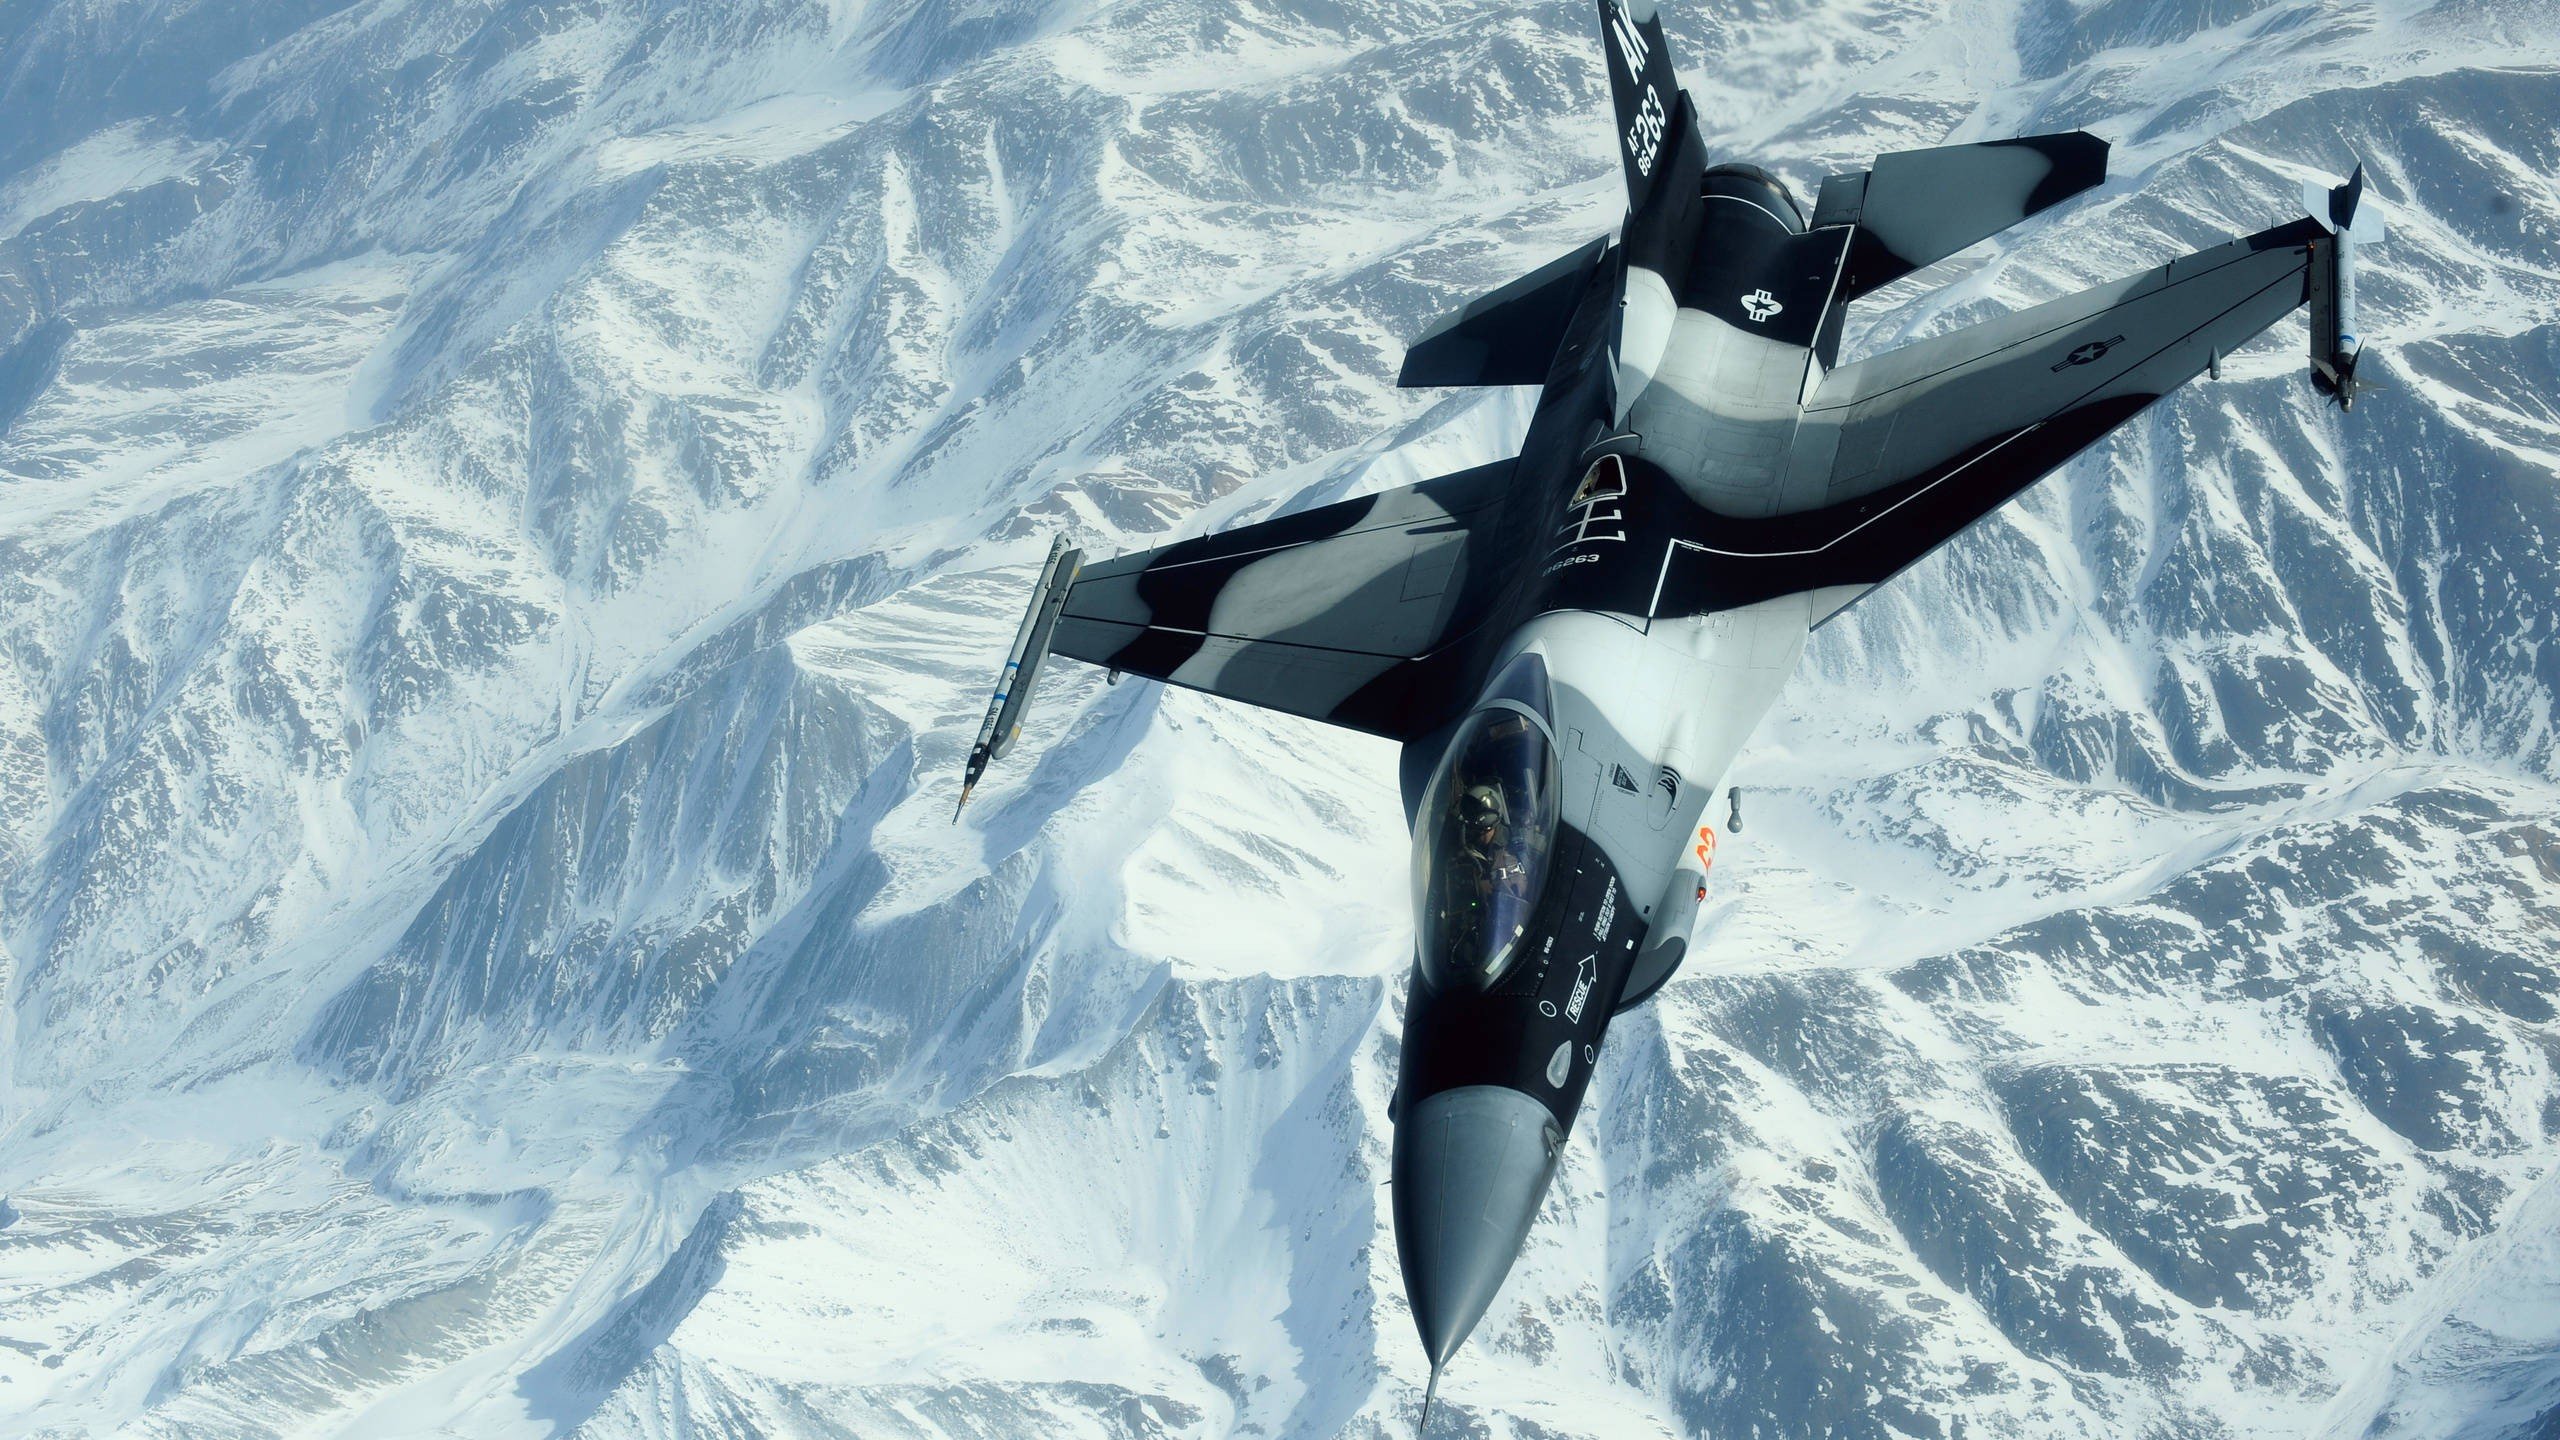 General Dynamics F 16 Fighting Falcon Wallpaper